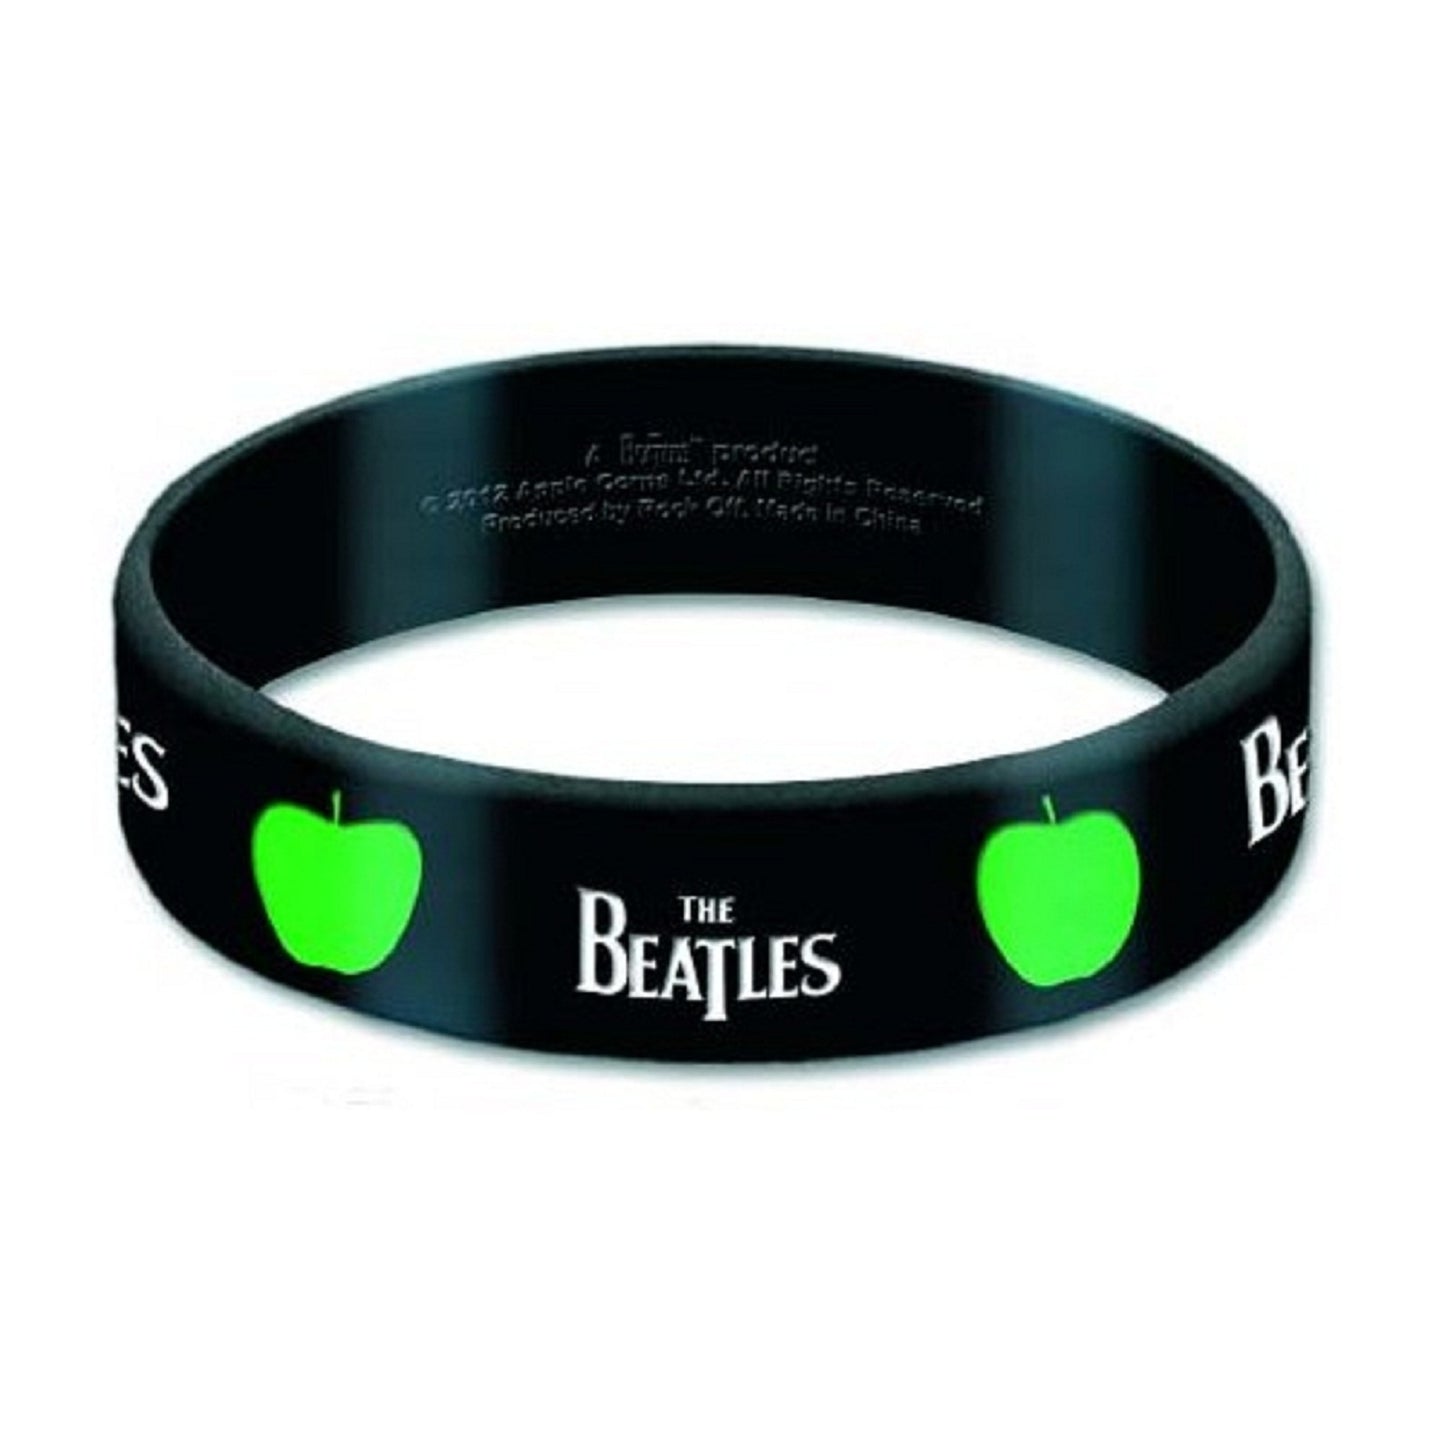 The Beatles Drop T band logo Wristband